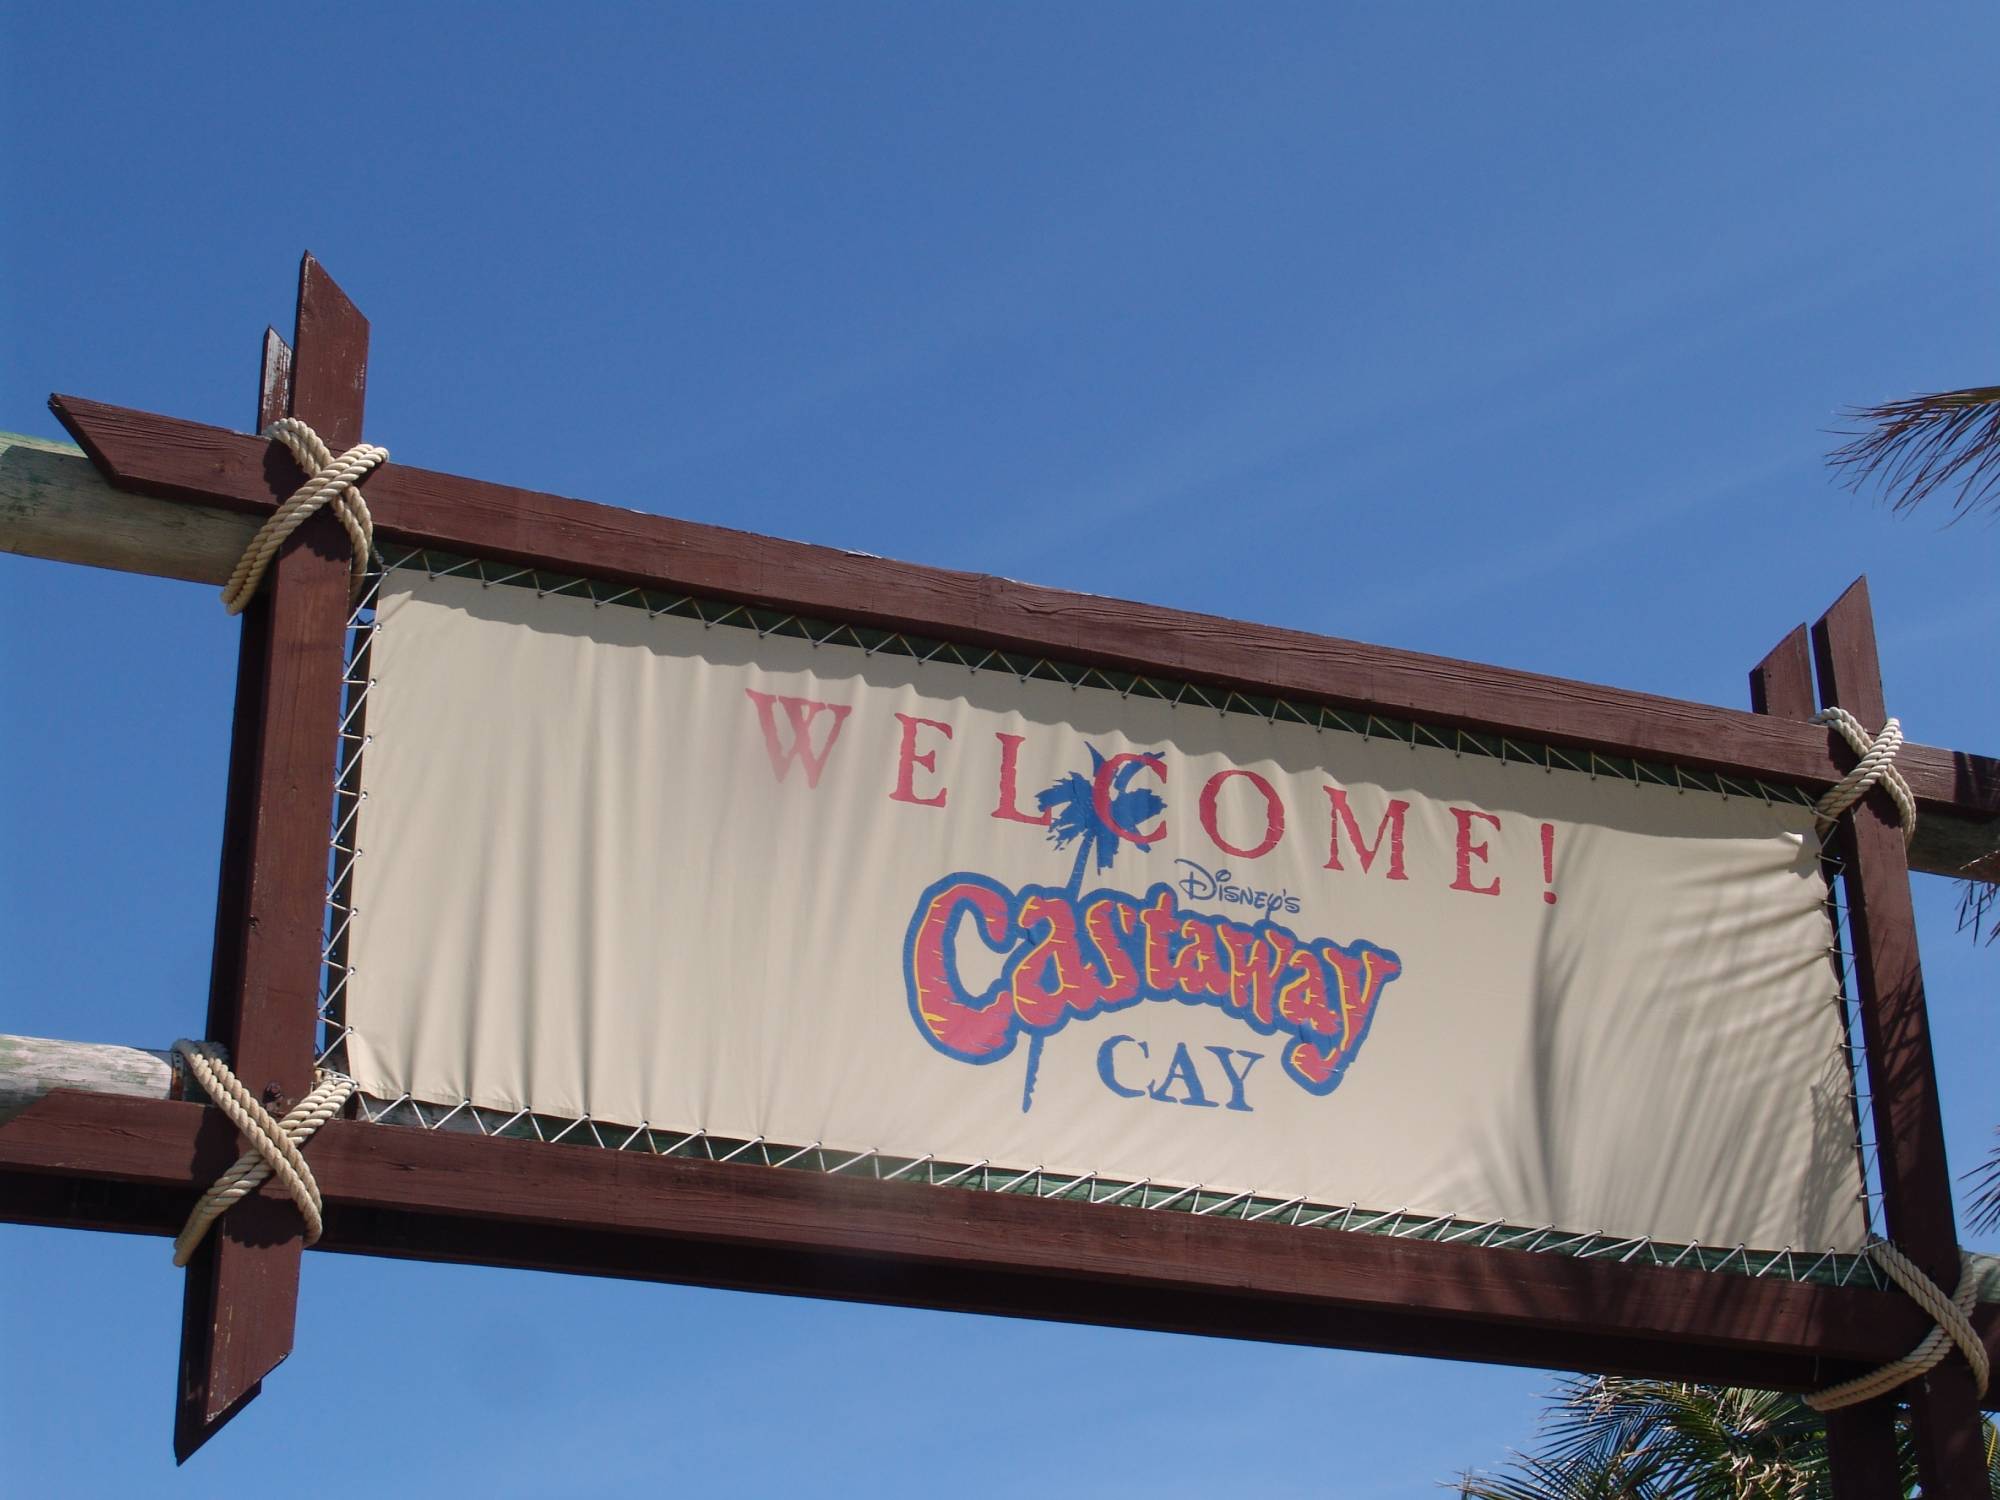 Castaway Cay - signs